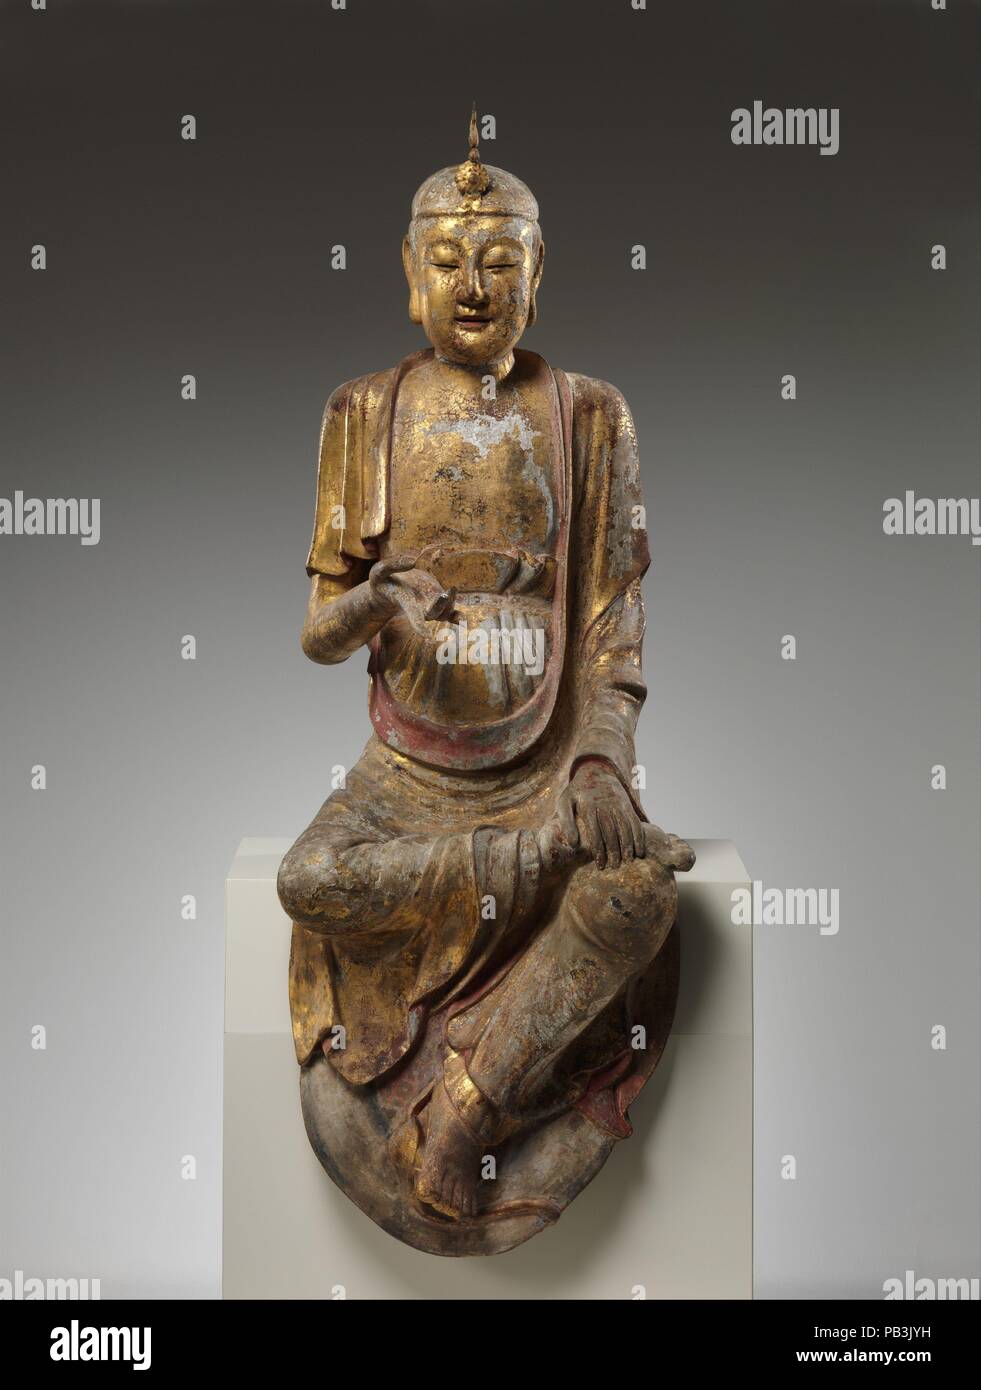 Bodhisattva. Culture: China. Dimensions: H. 49 1/2 in. (125.7 cm); W. 18 1/4 in. (46.4 cm). Date: 16th-17th century. Museum: Metropolitan Museum of Art, New York, USA. Stock Photo